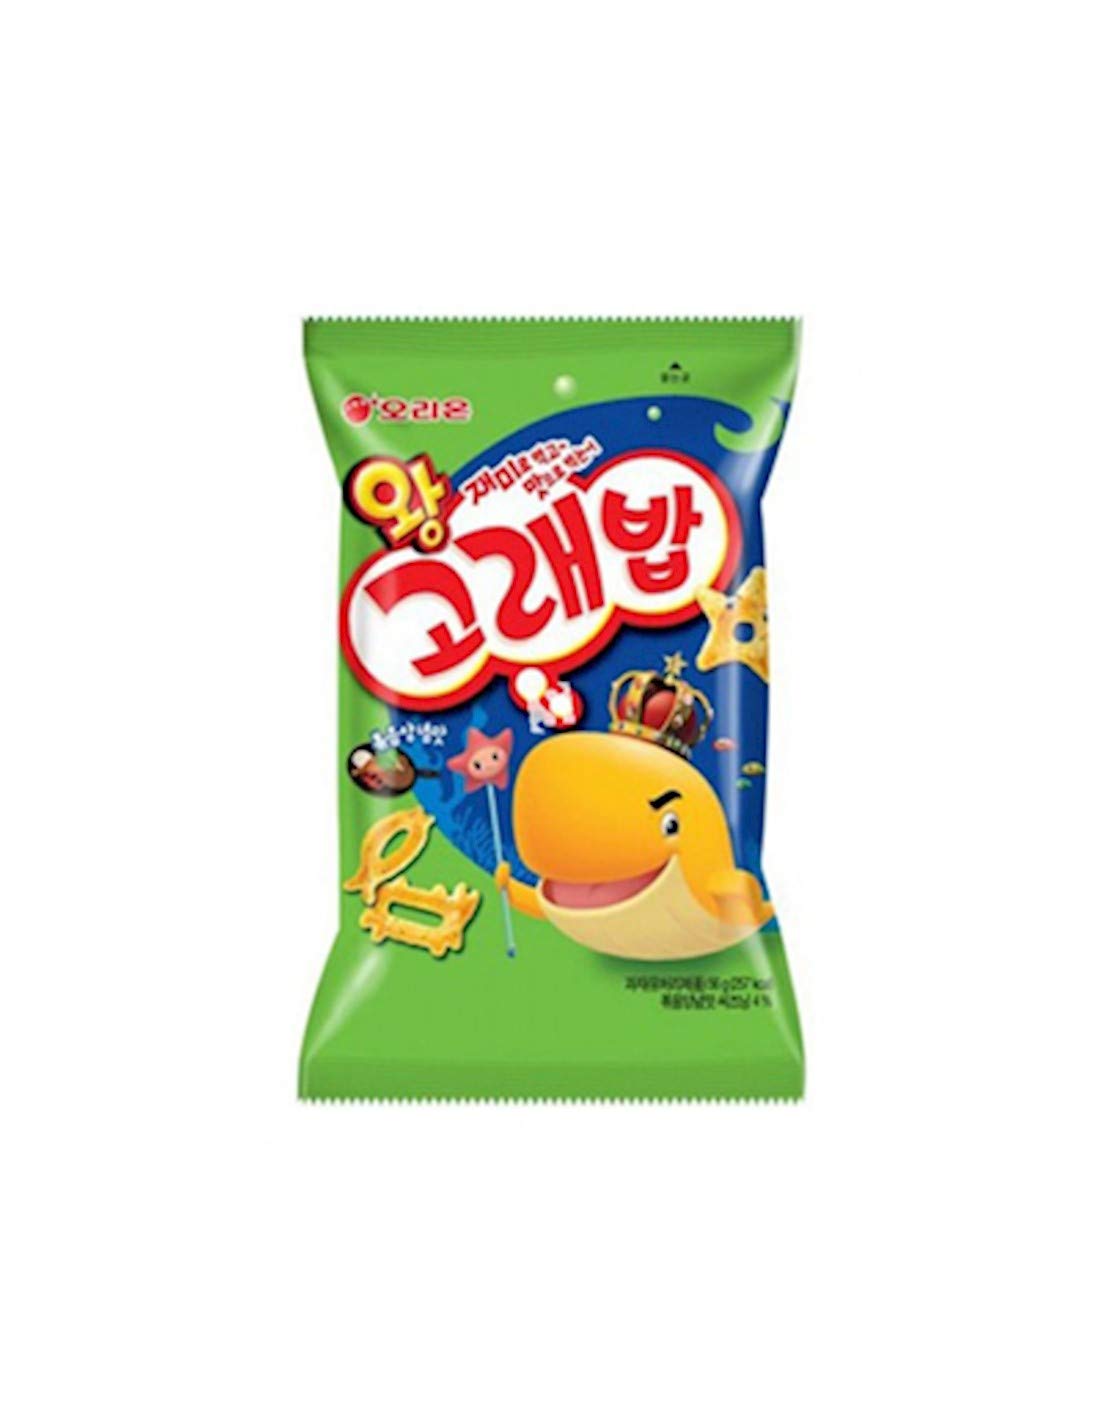 Dongwon Korean Olive Oil Flavored Seasoned Seaweed (Laver) Snack 0.17-ounce Bags (Pack of 24)